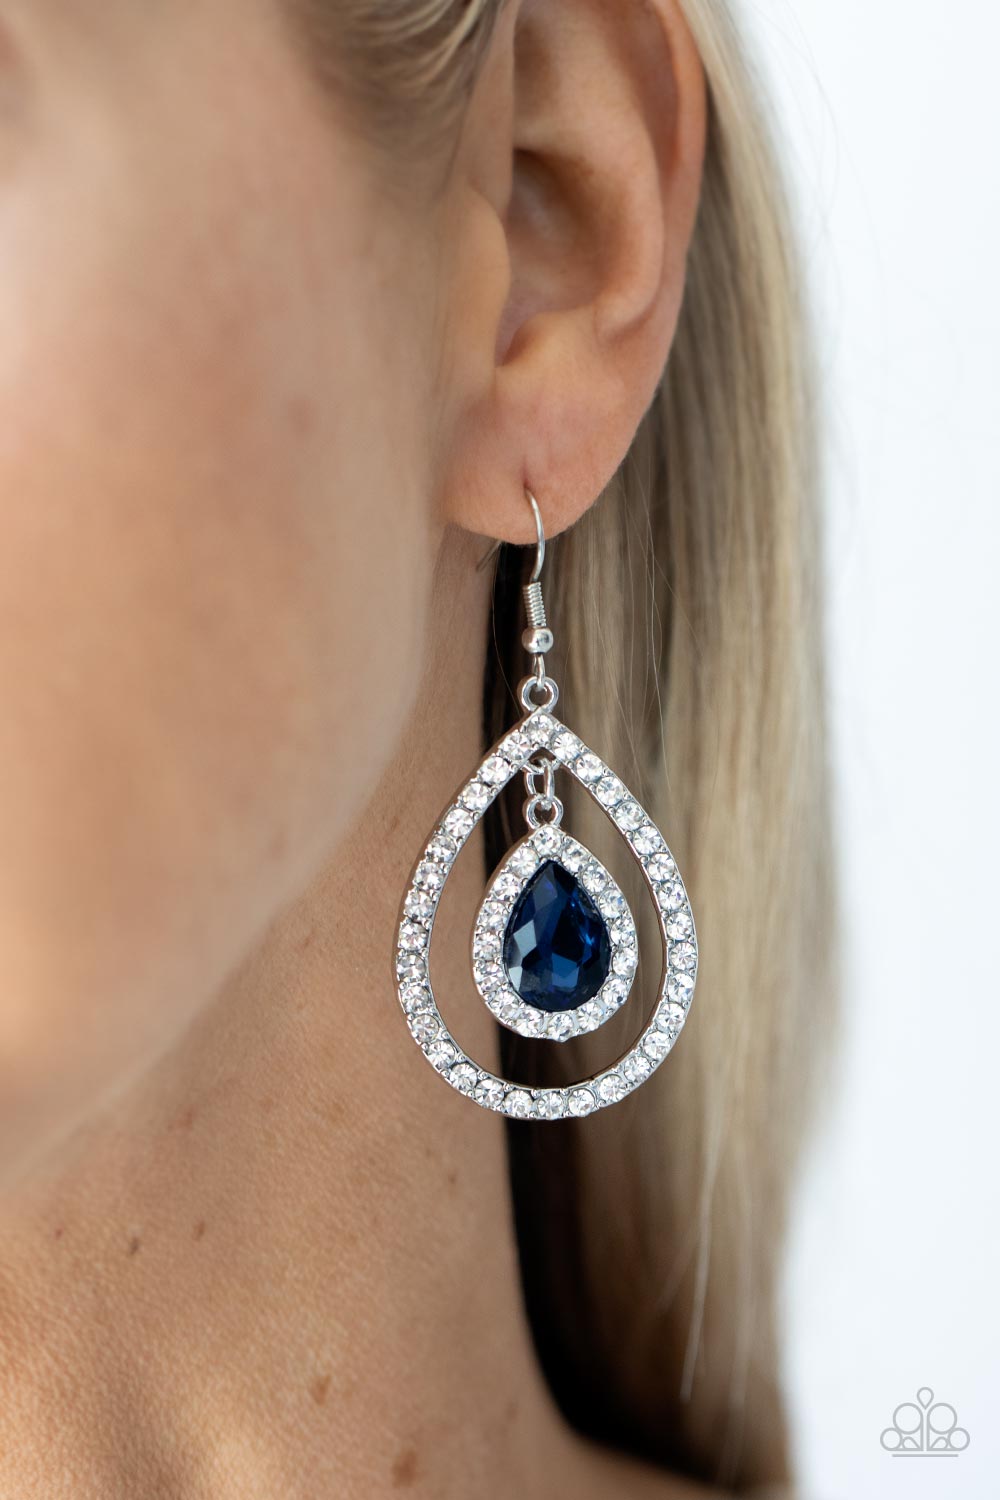 Blushing Bride - Blue Earrings